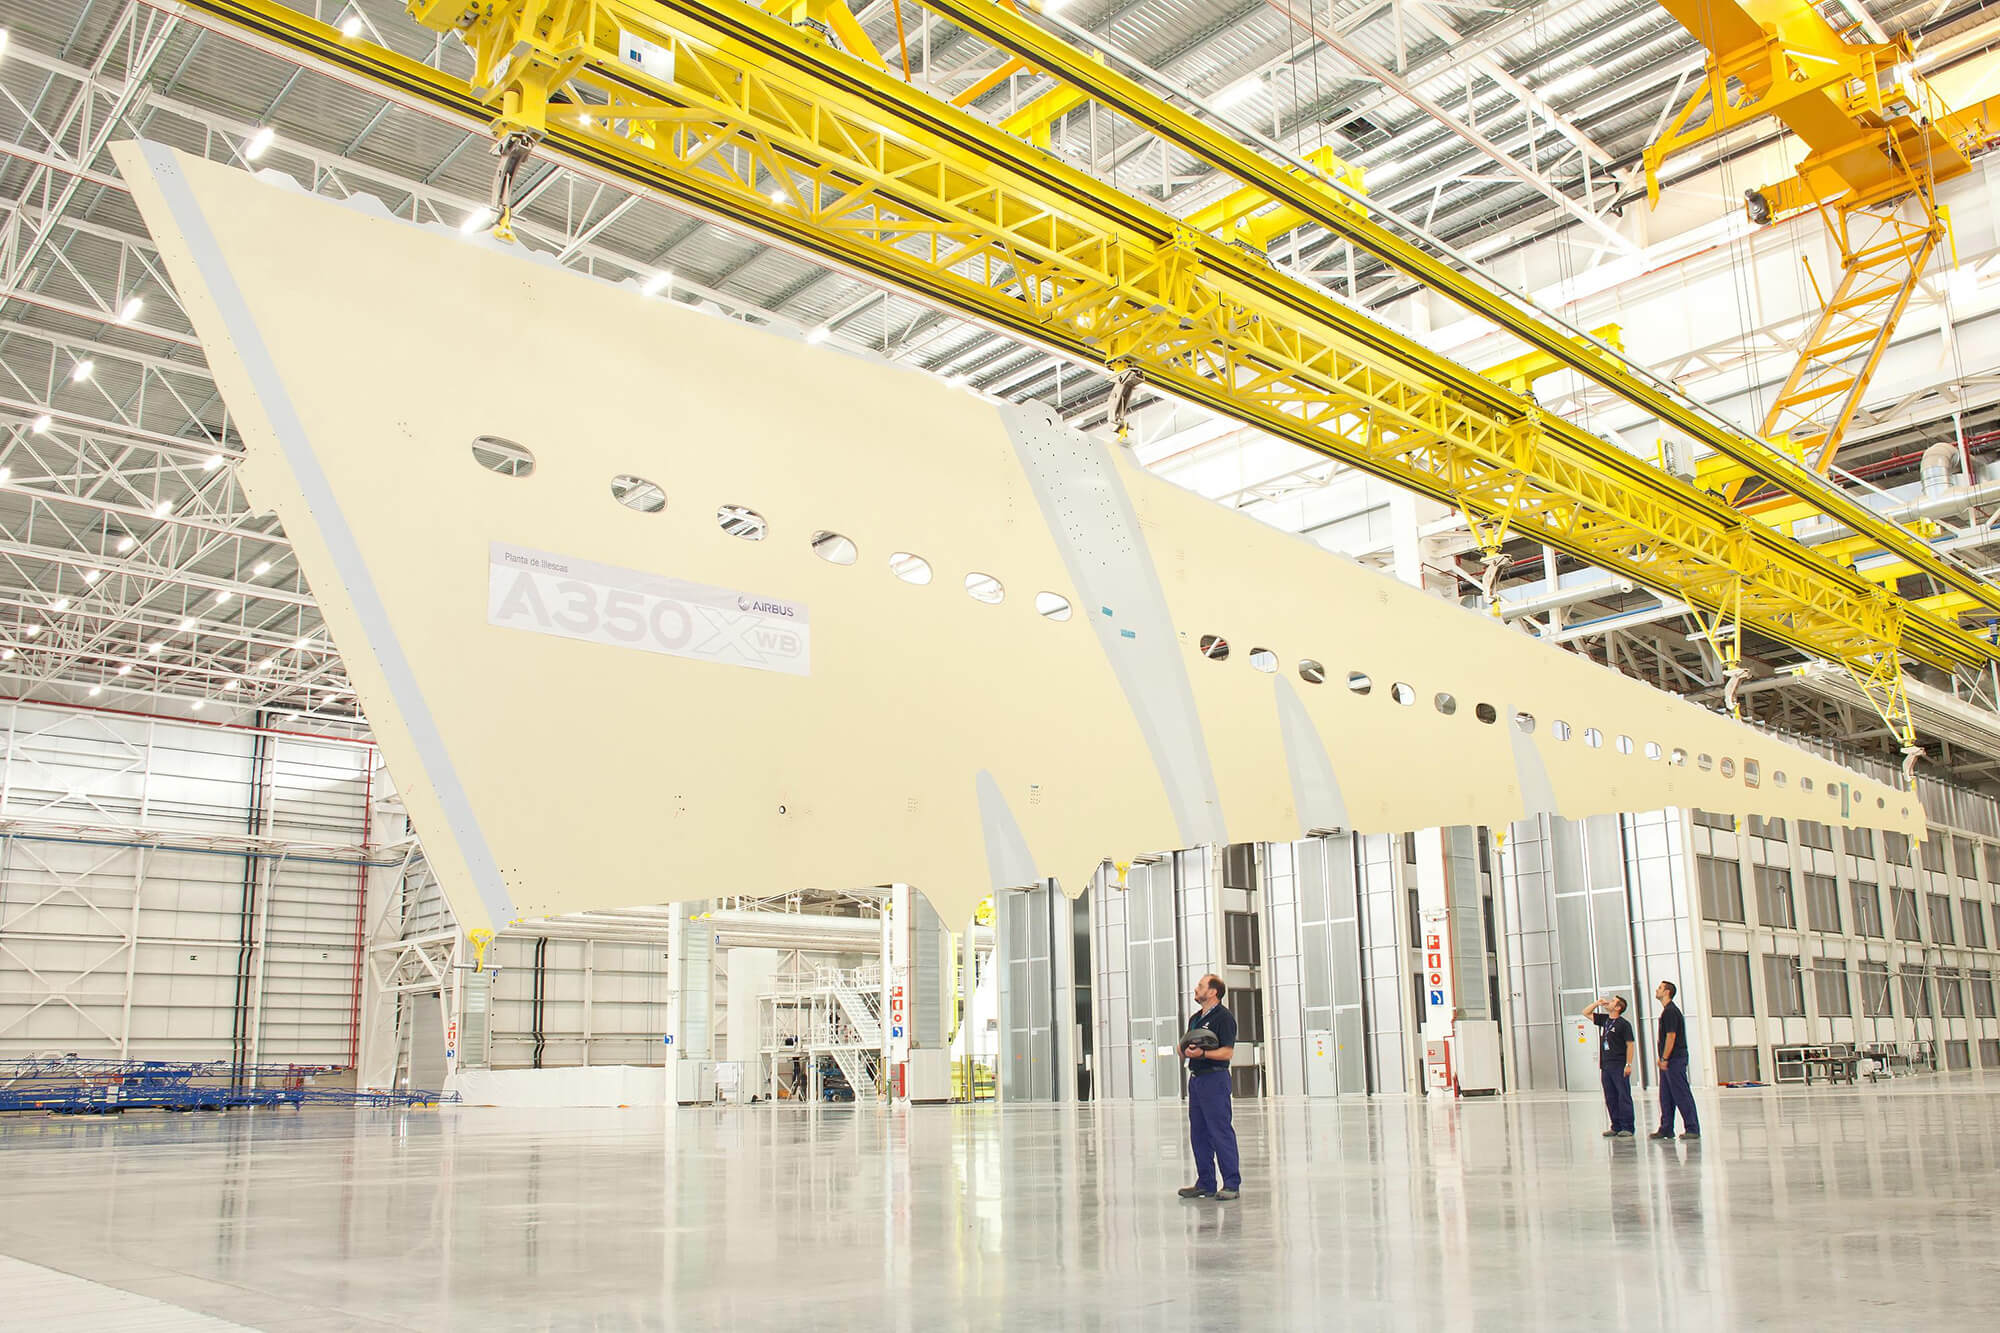 Airbus a350 wing broughton factoryx hidden